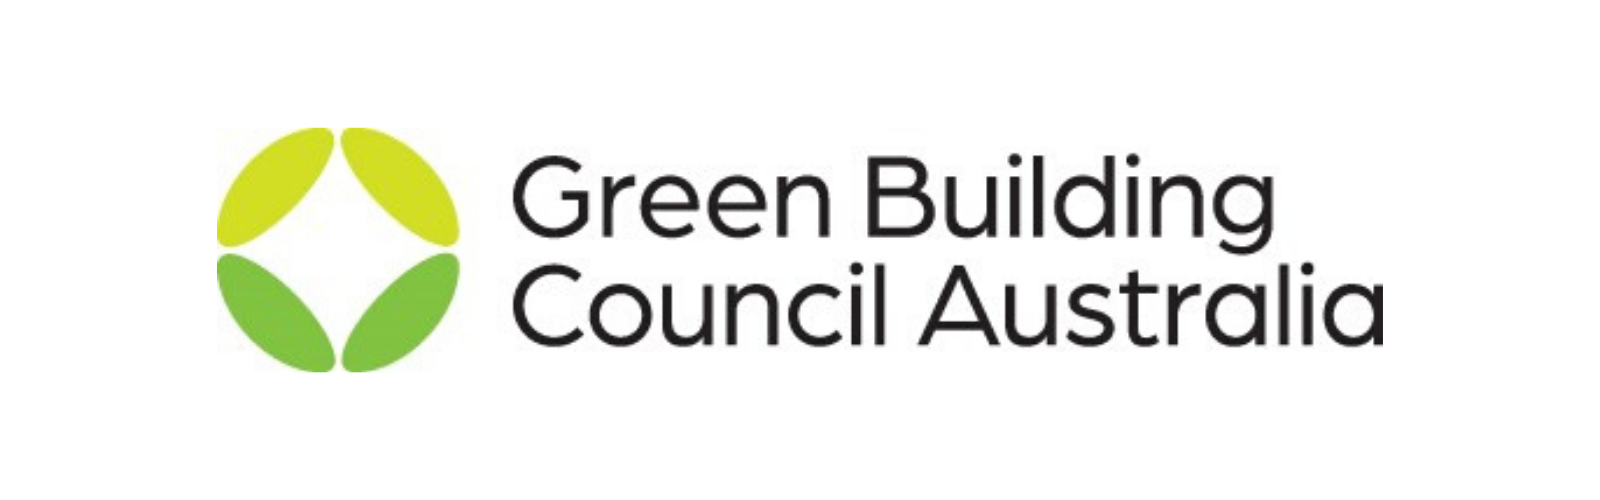 Green Building logo